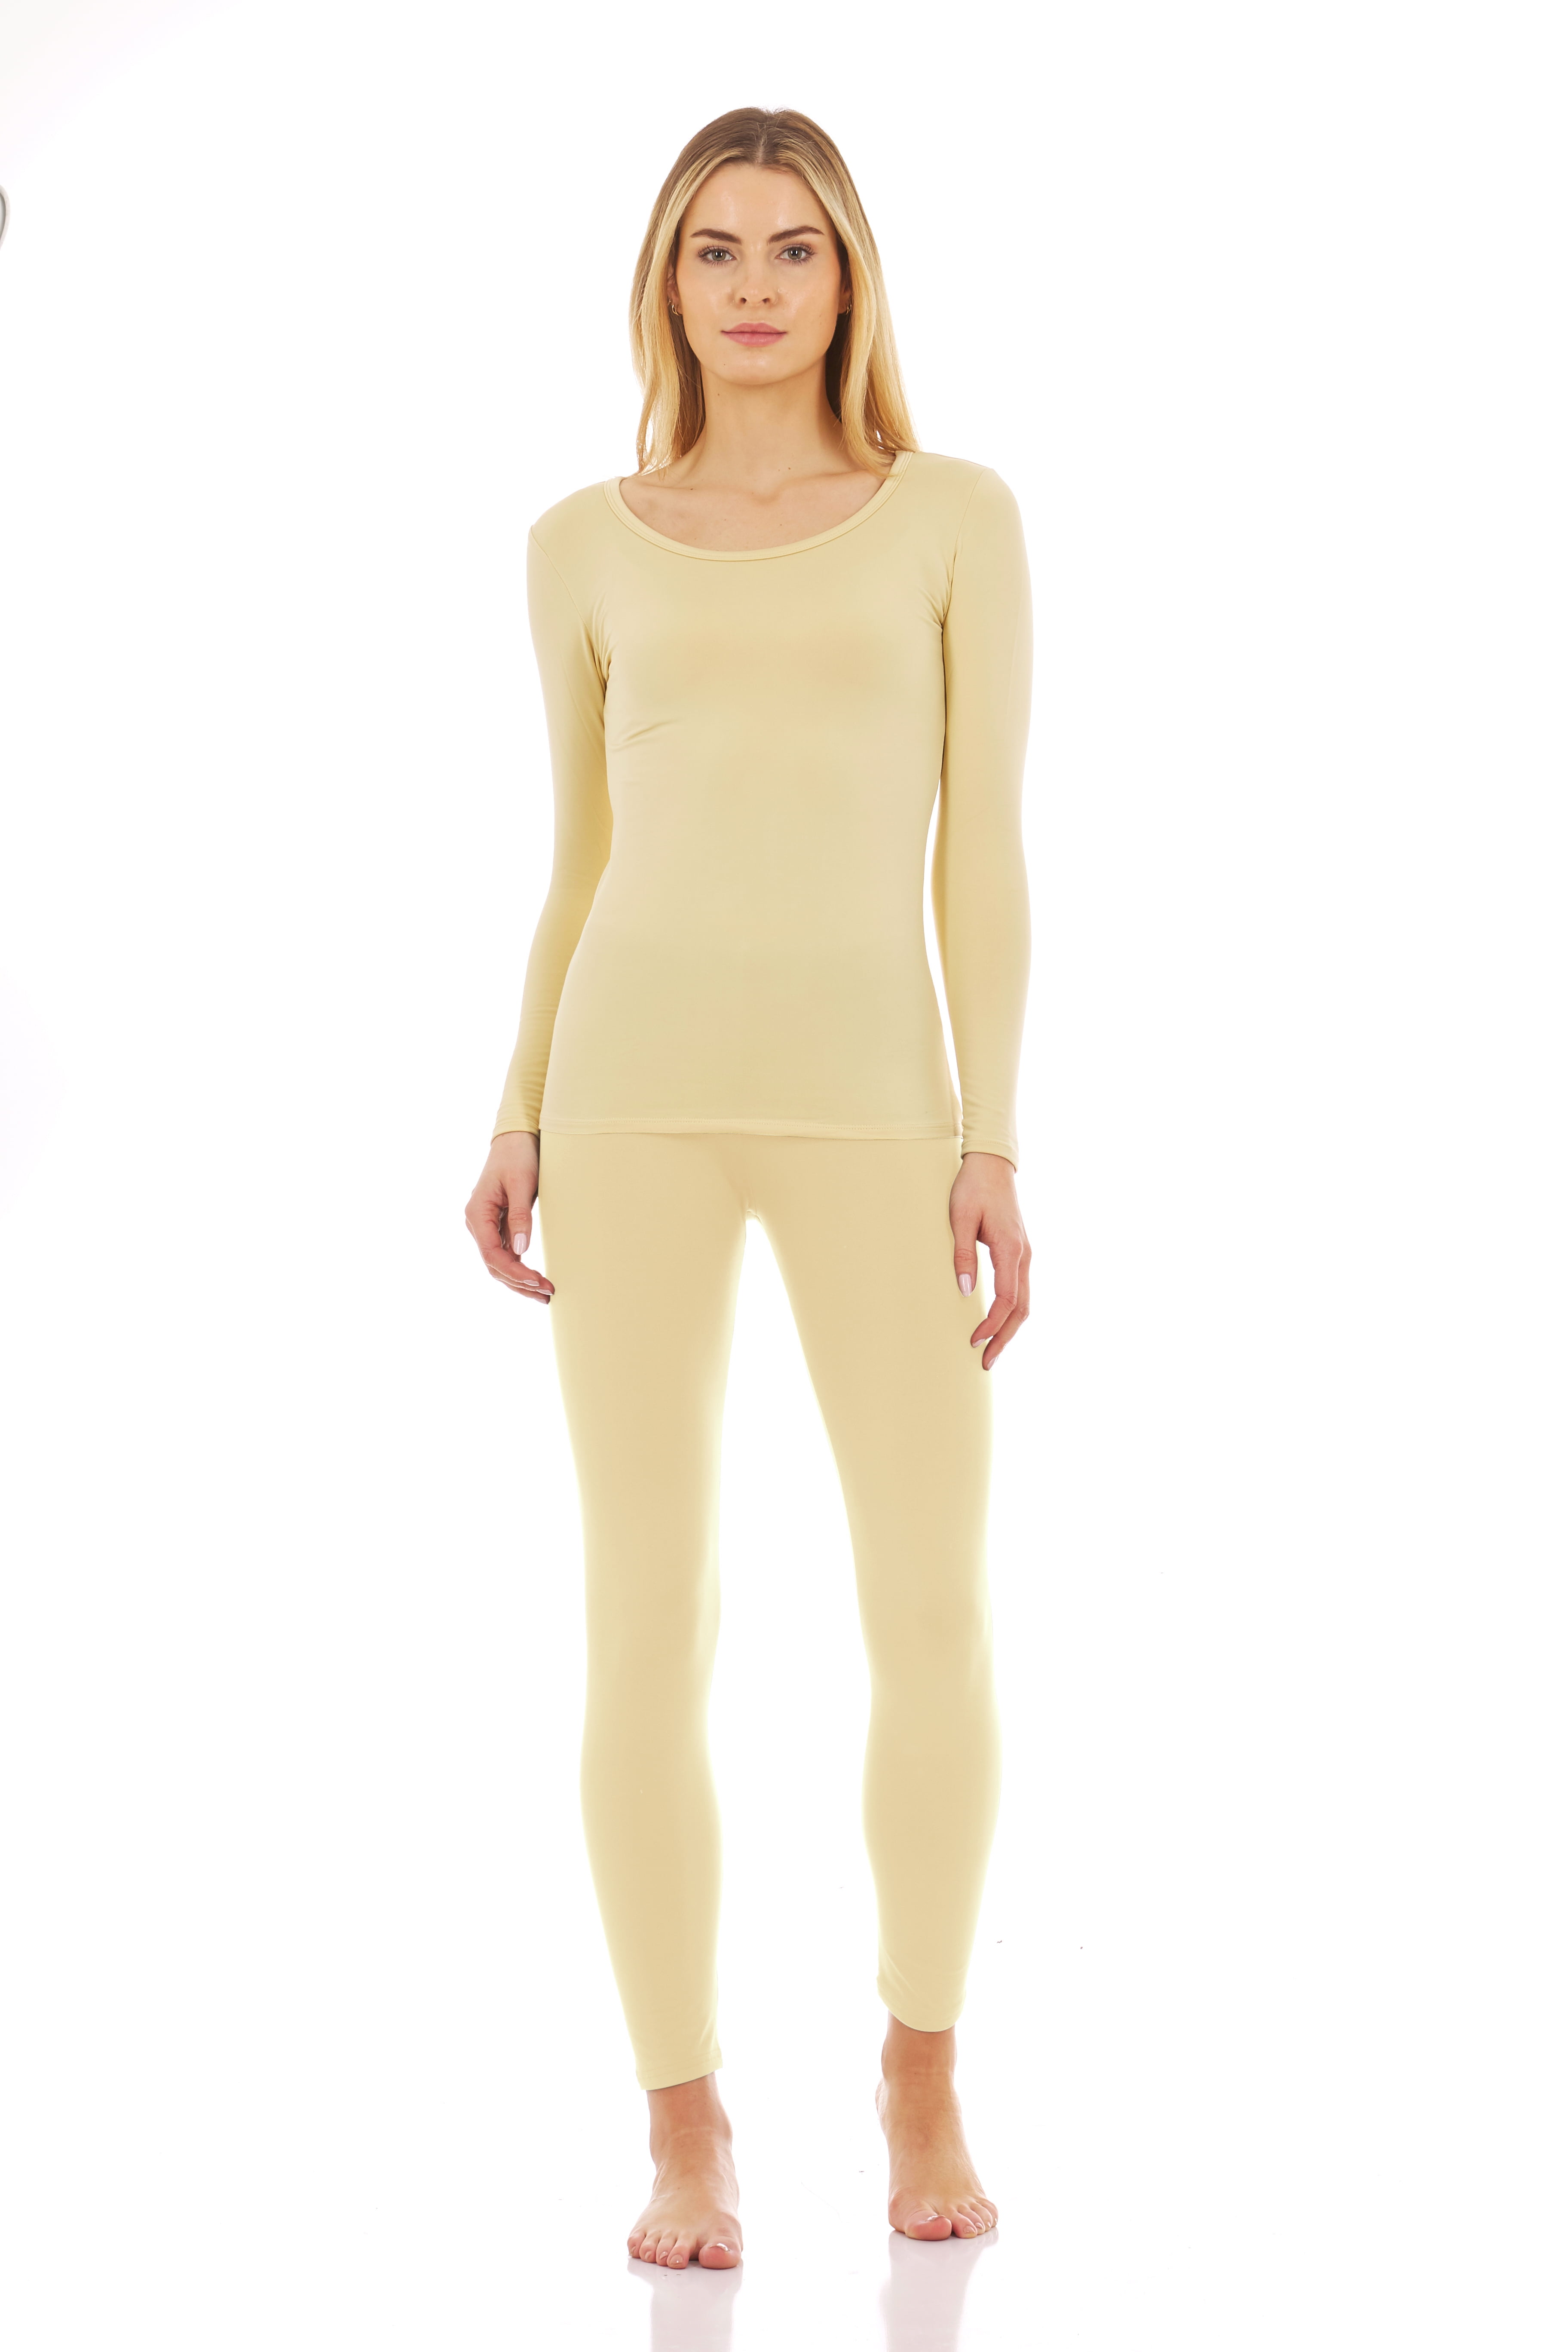 Thermajane Thermal Underwear for Women Long Johns Scoop Neck Set (XXS-3XL)  